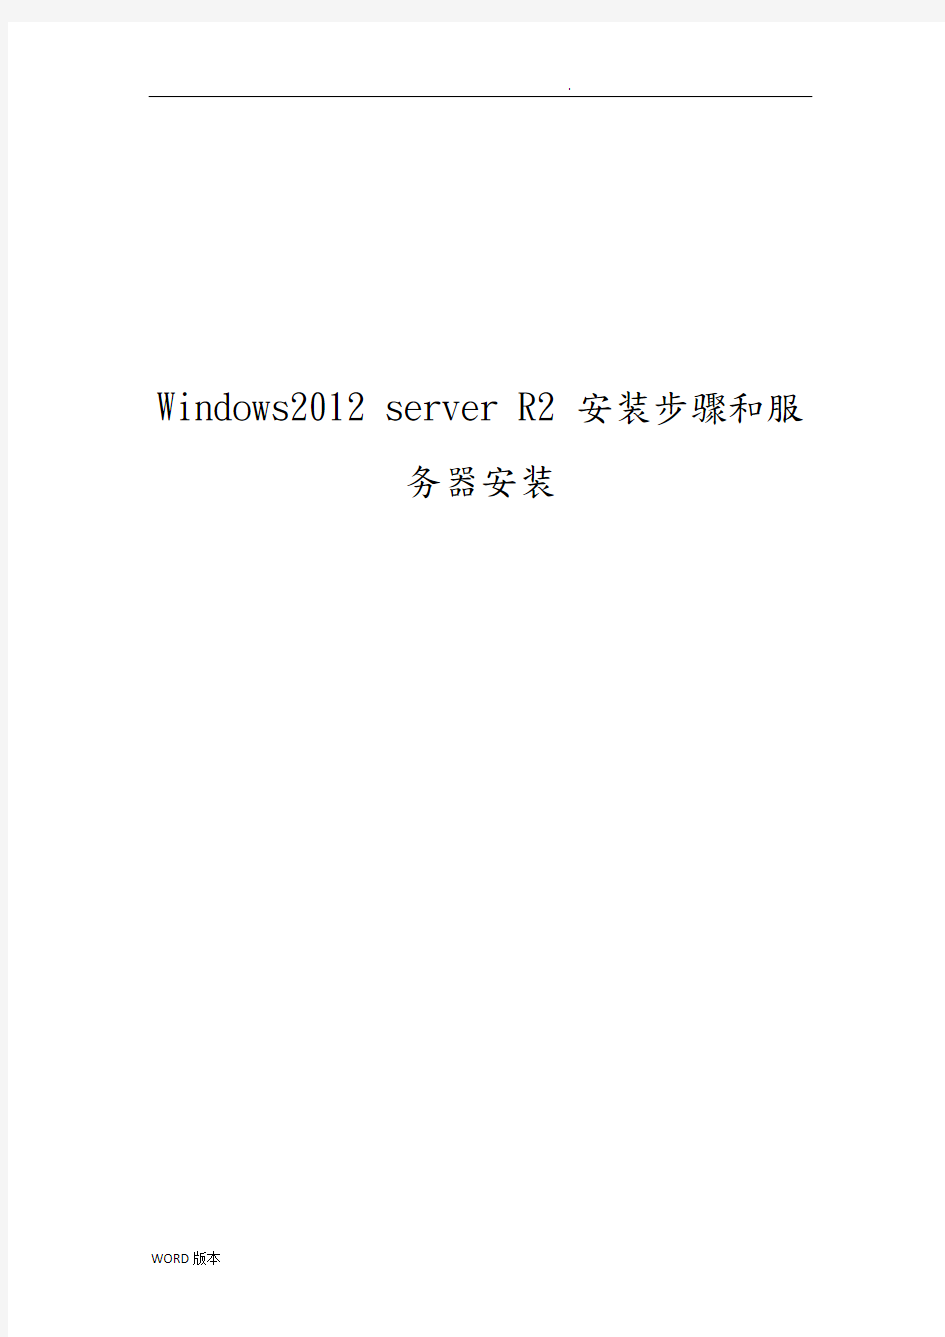 Windows2012-server-R2-安装步骤和服务器安装